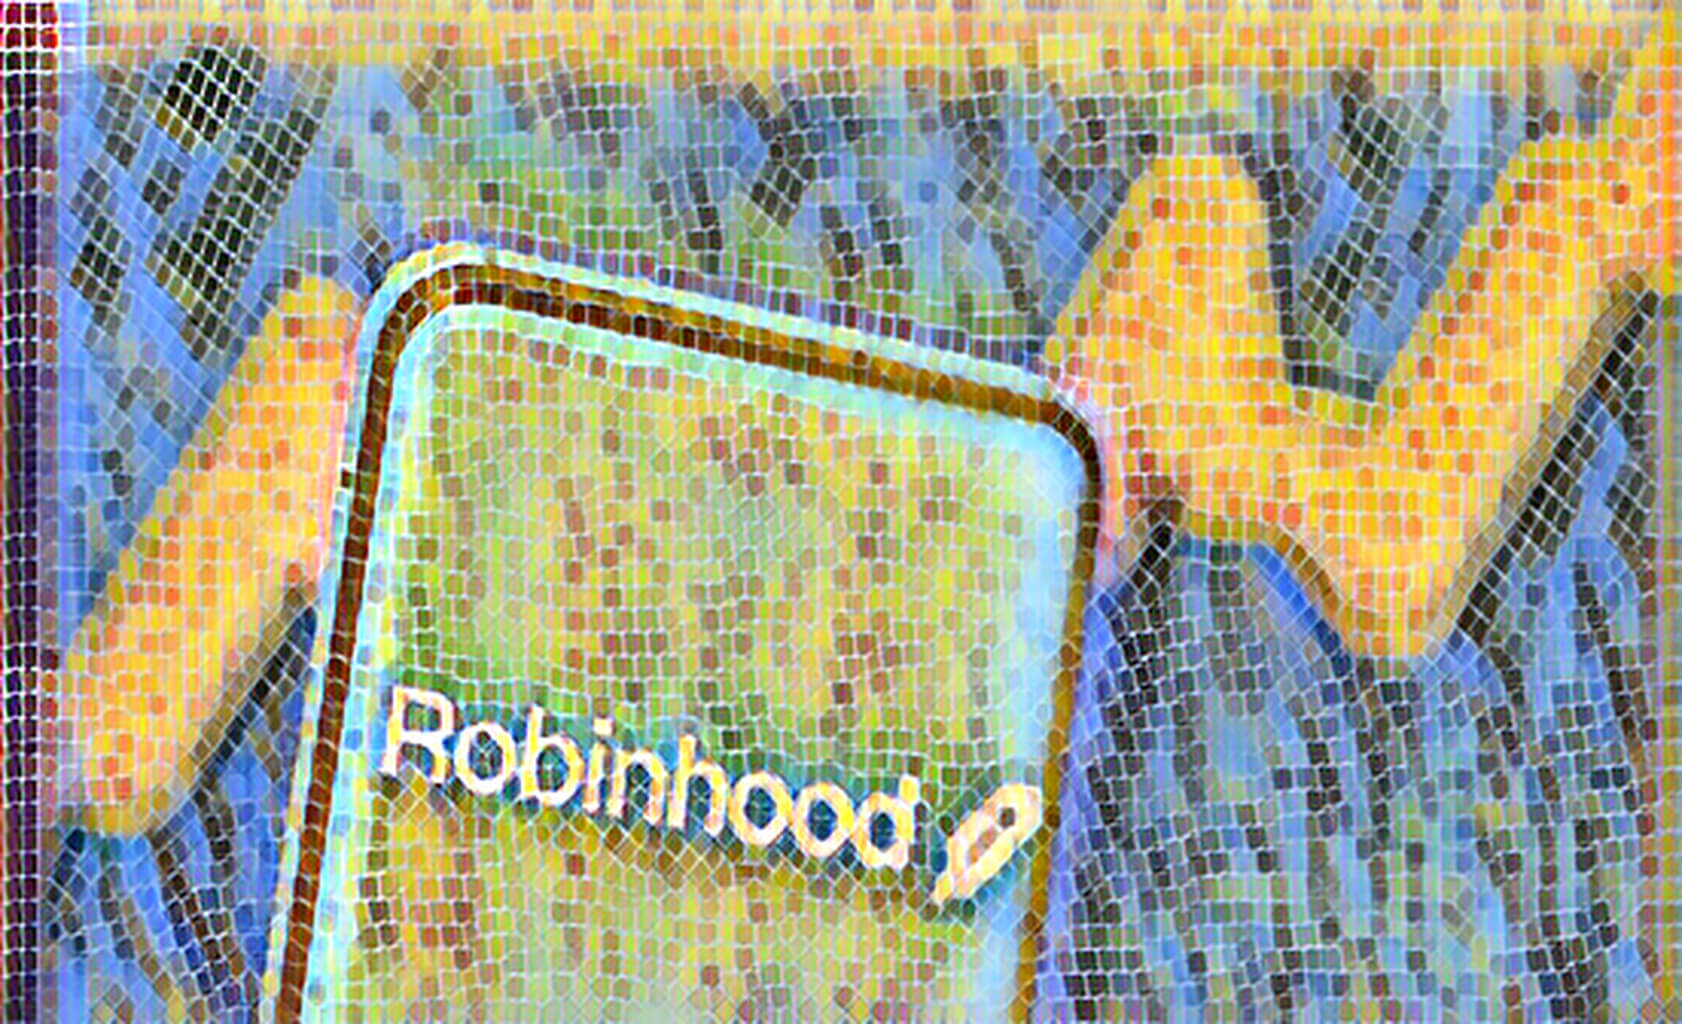  robinhood       